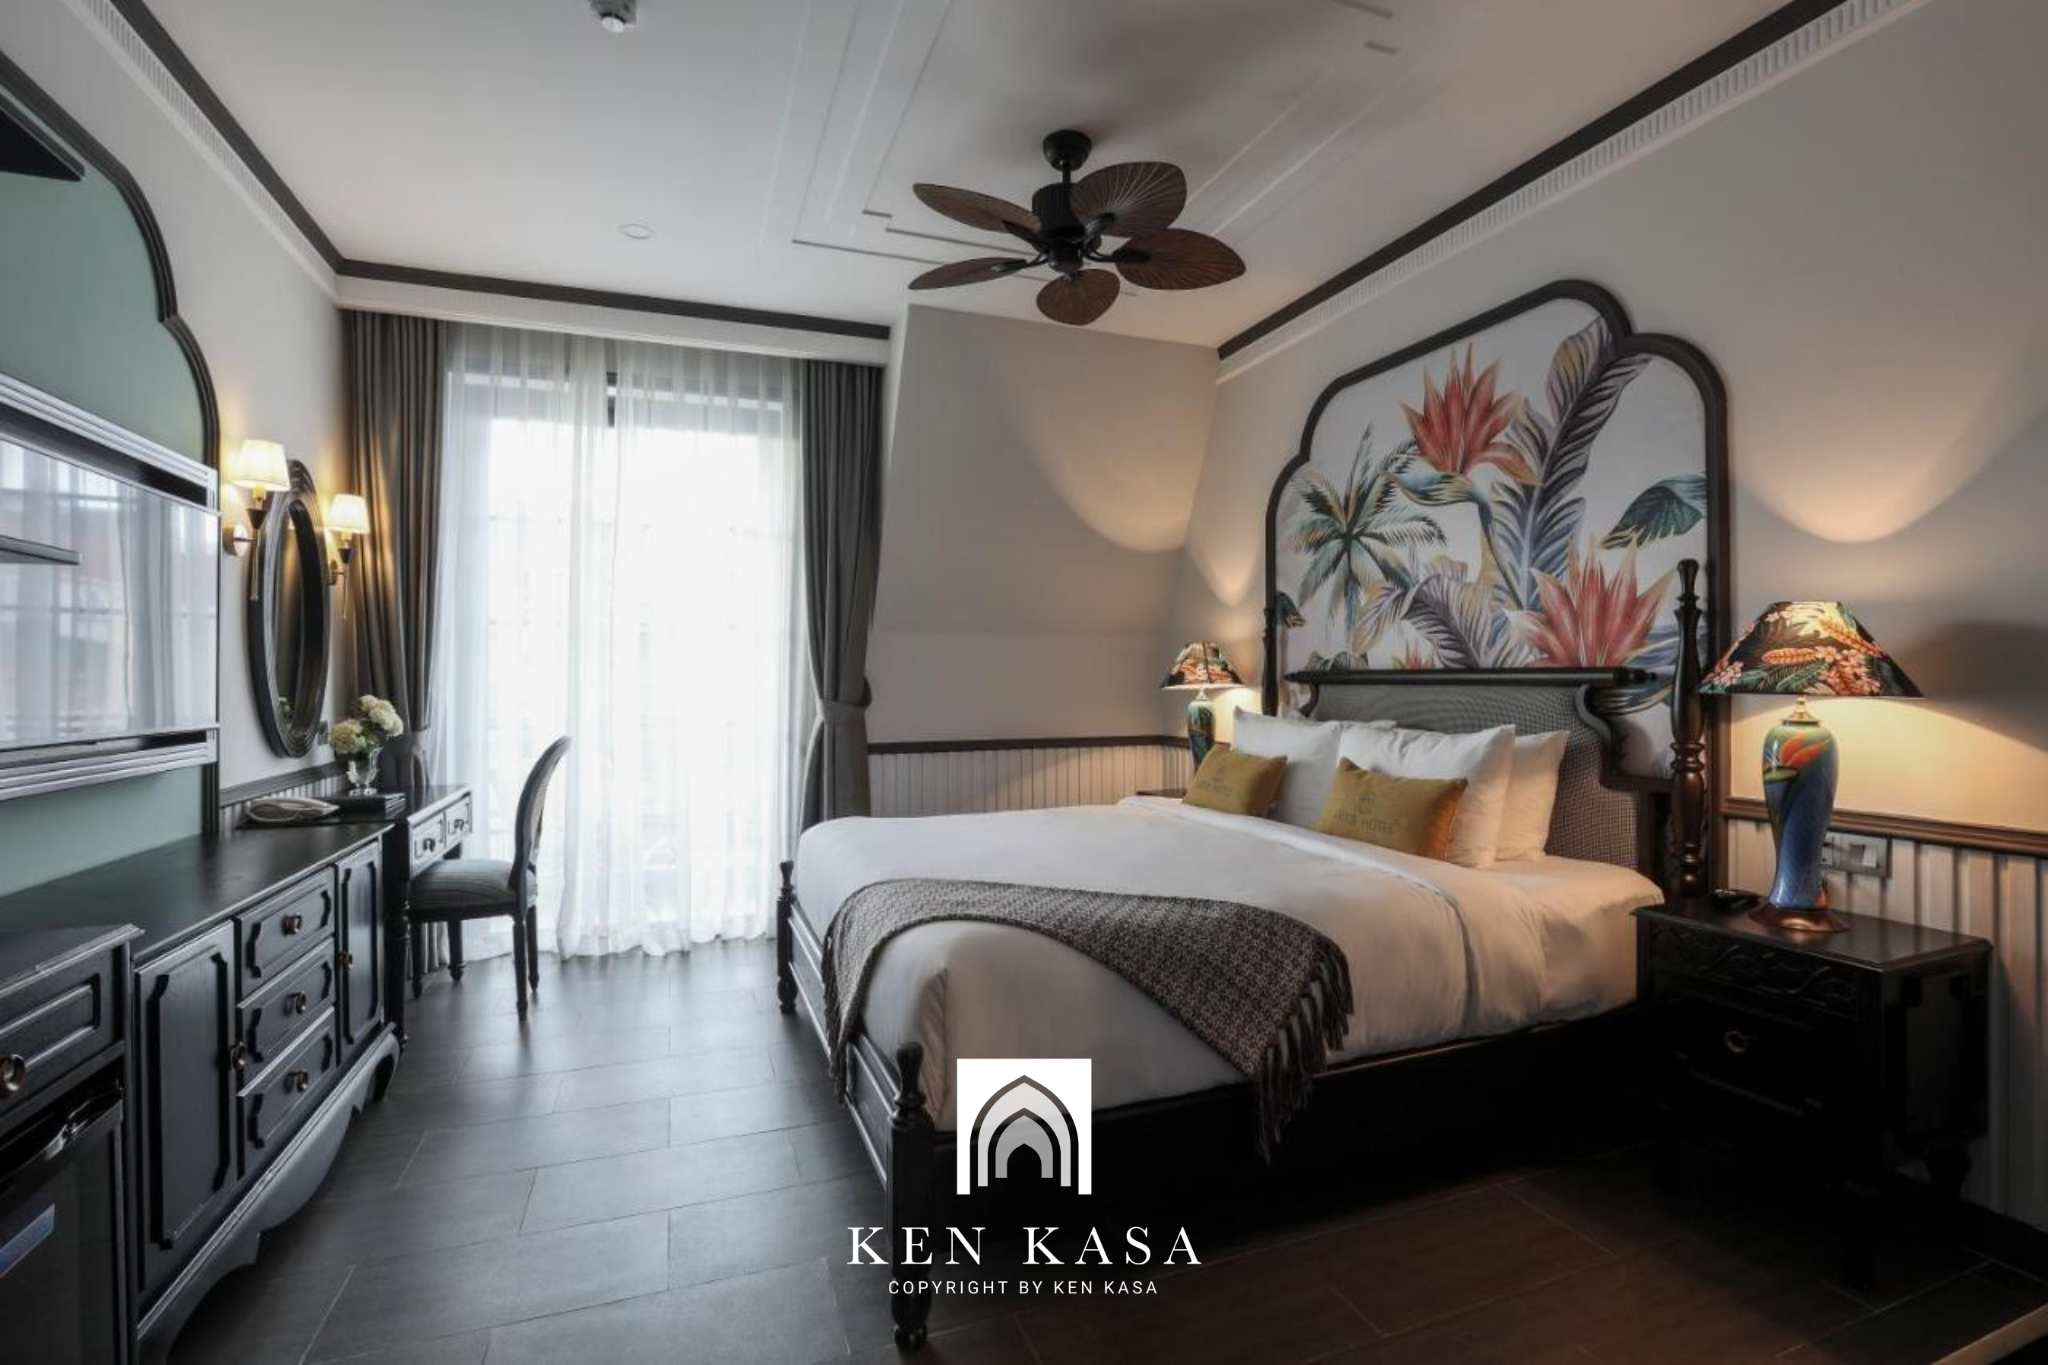 Superior king bedroom tại Artis Hotel Đà Lạt 